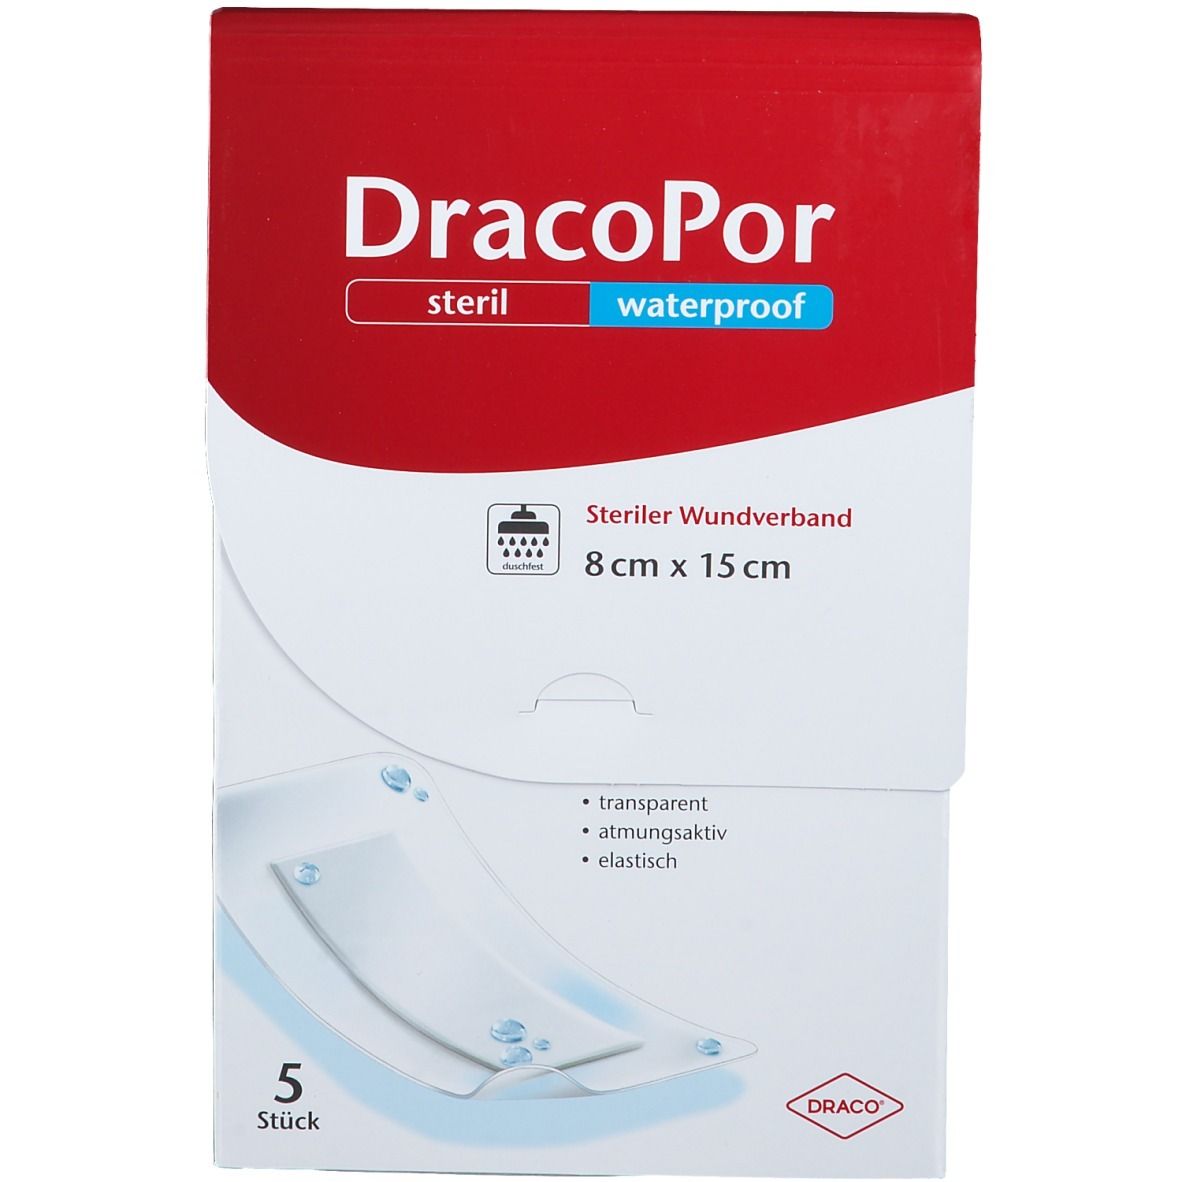 DracoPor waterproof 8 x 15 cm steril